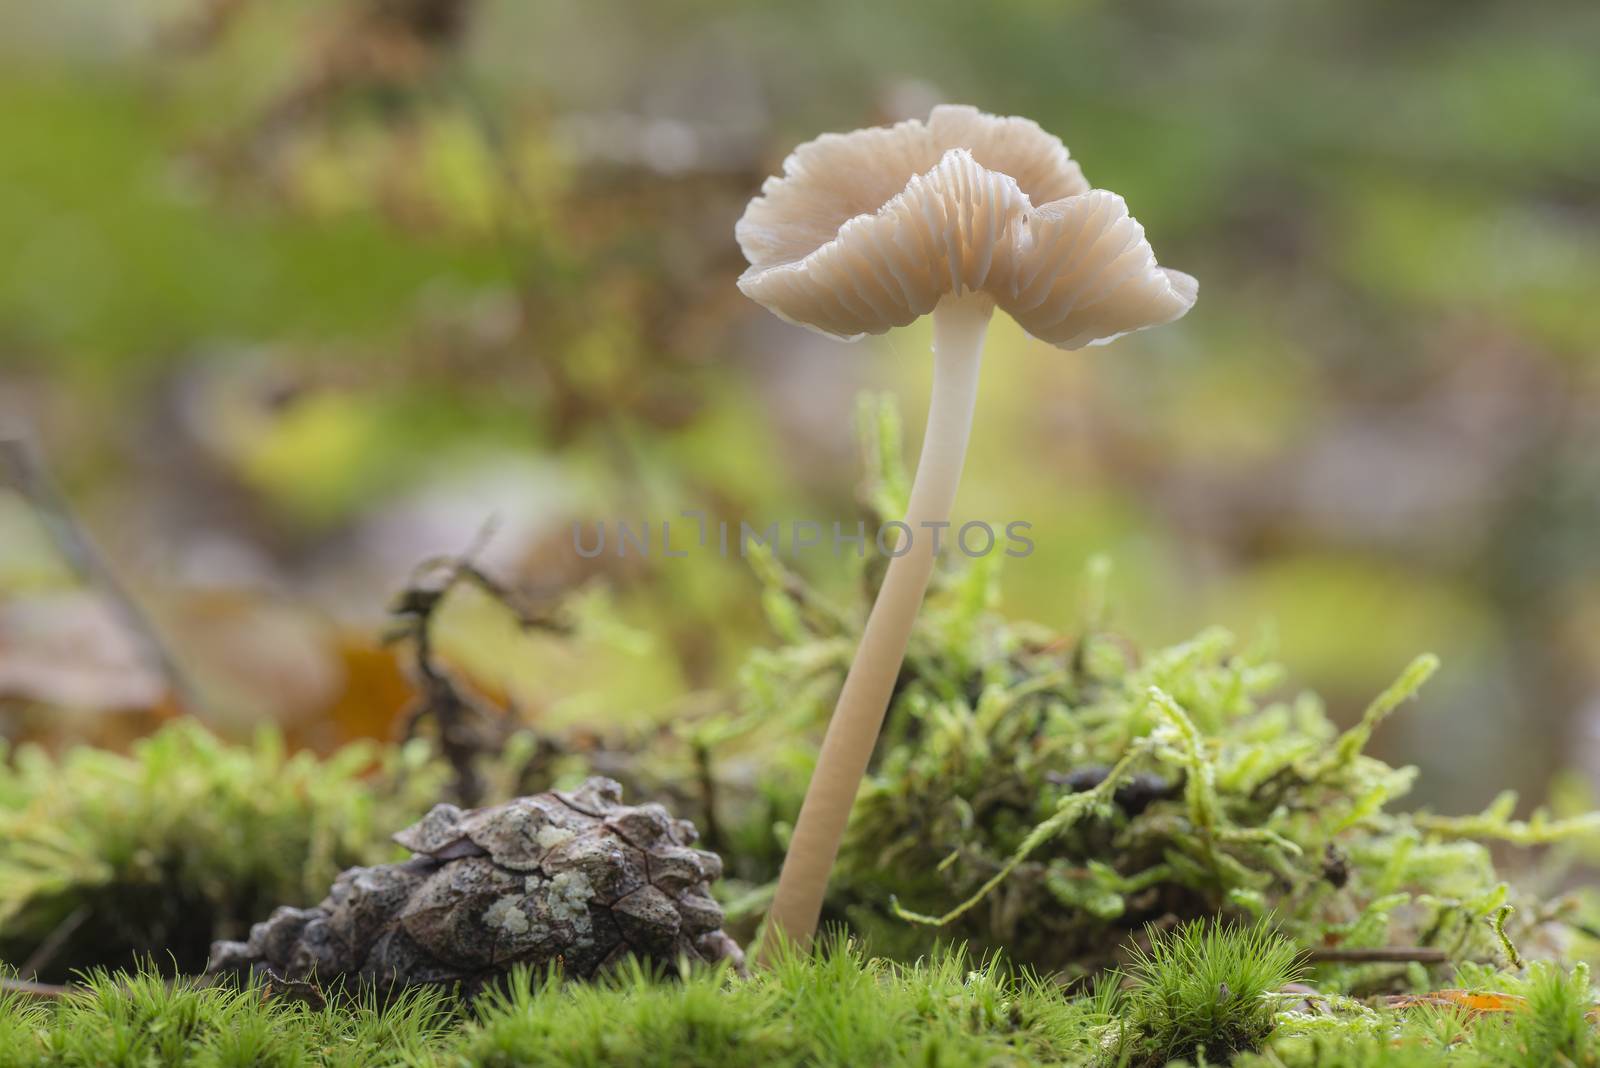 Mushroom called Mycena rosea
 by Tofotografie